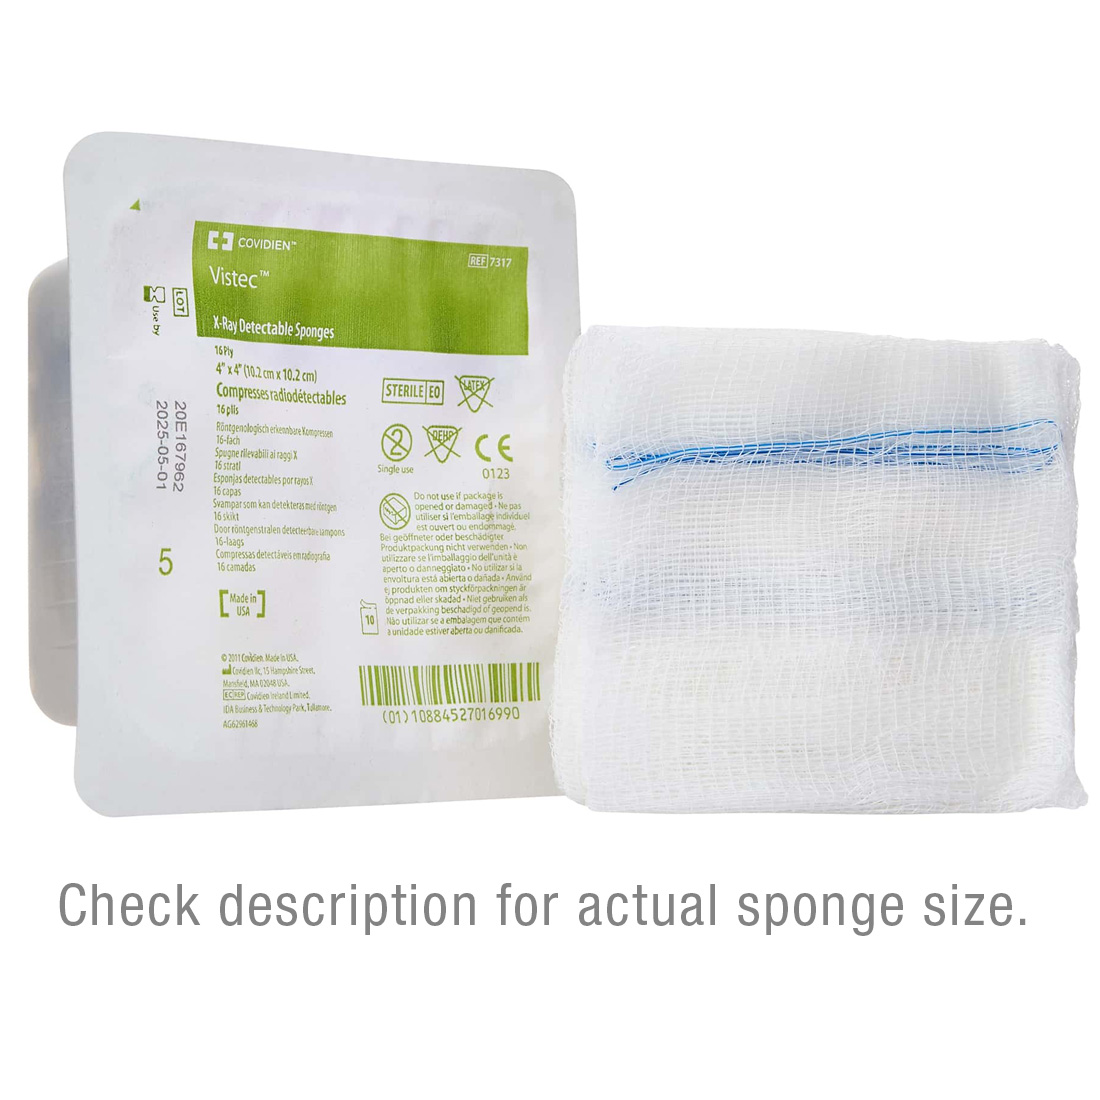 Vistec™ Gauze Sponge, X-Ray Detectable, 31/2" x 4", 32 Ply, Sterile, 10/Tray, 48 Trays/Case - 480/Case